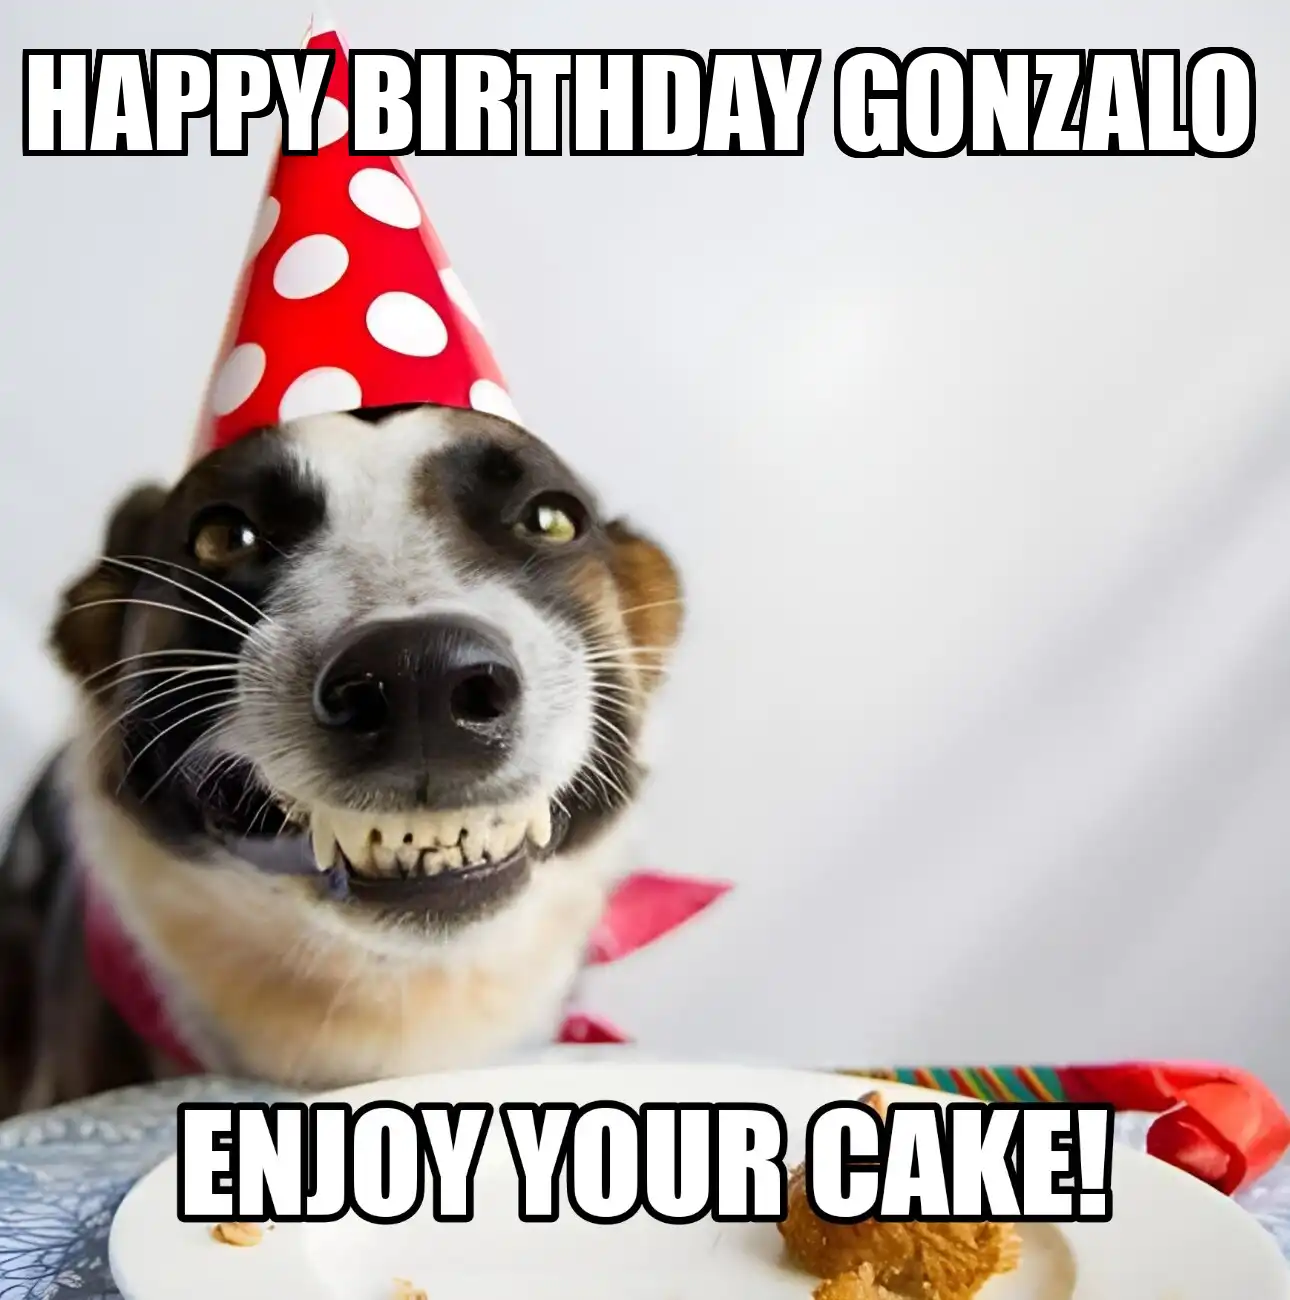 Happy Birthday Gonzalo Enjoy Your Cake Dog Meme